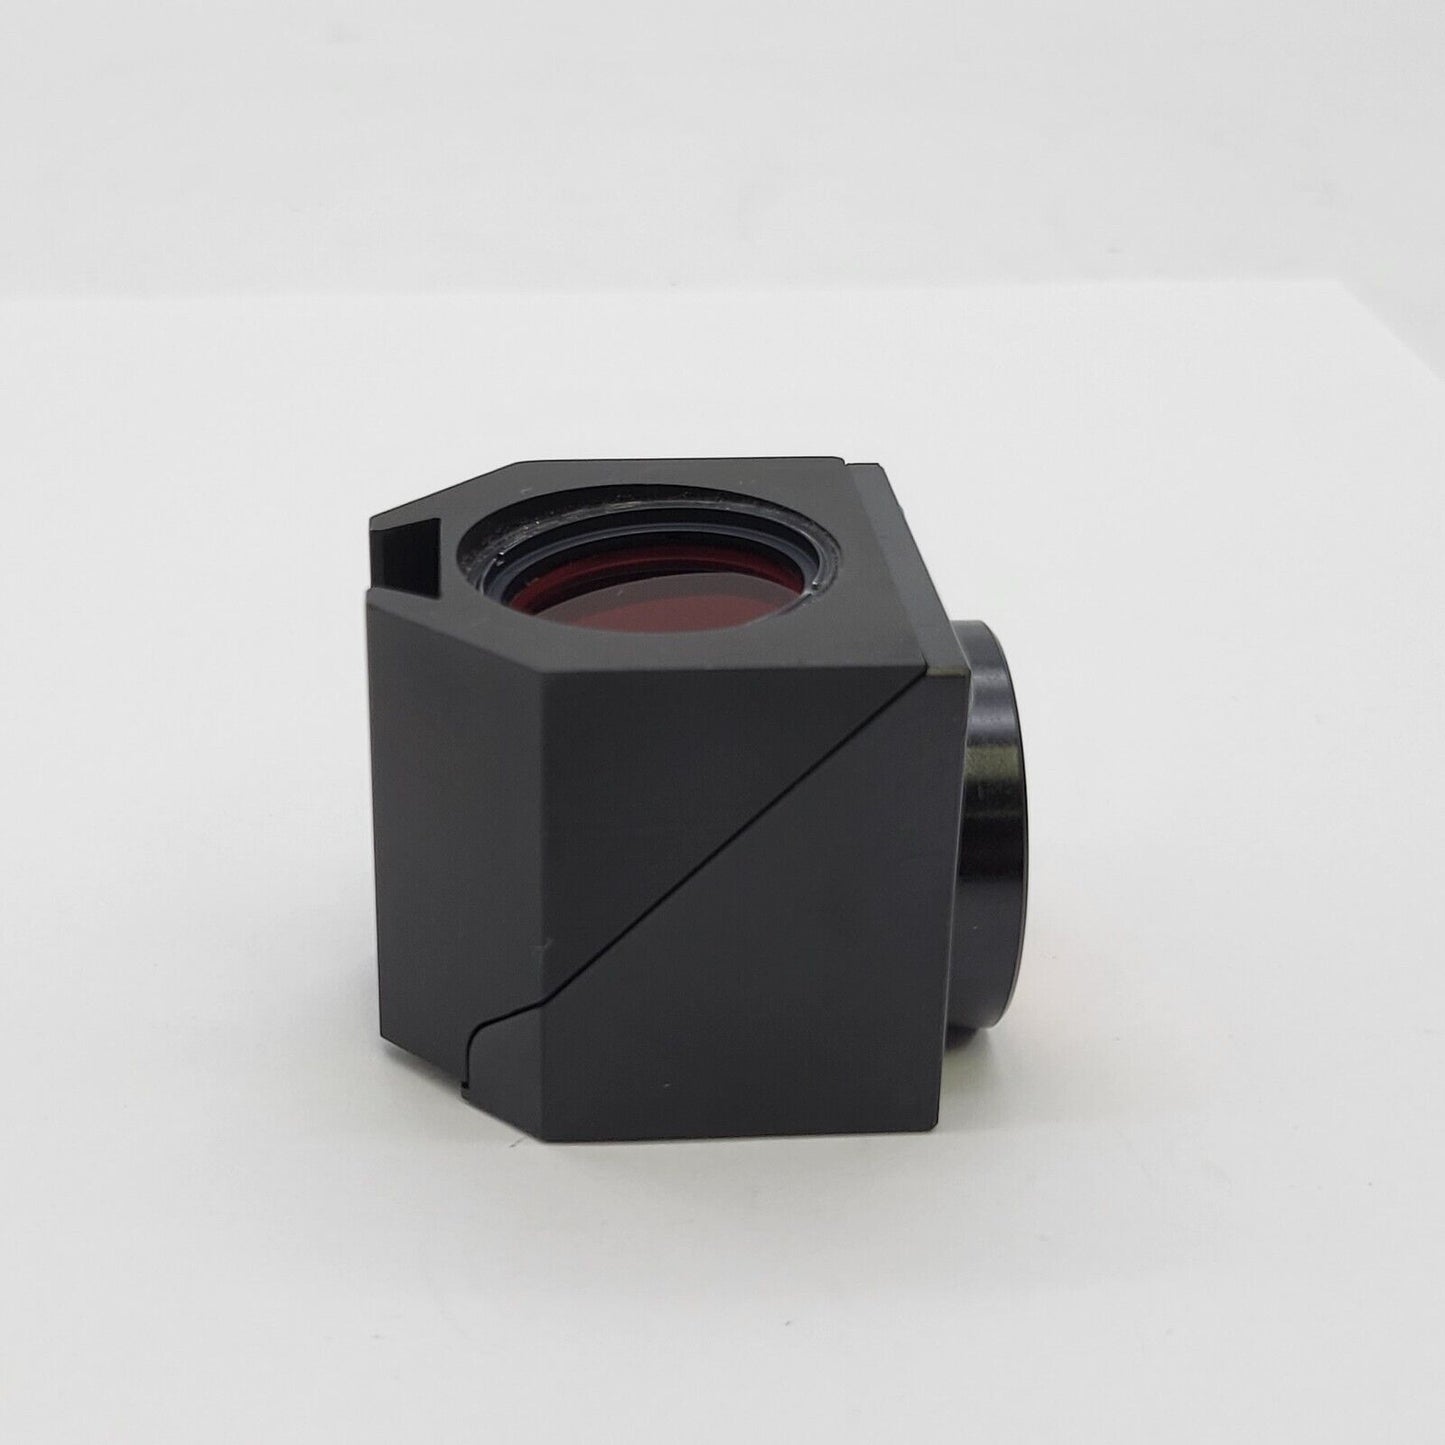 Olympus Microscope Fluorescence Filter Cube U-MWG - microscopemarketplace